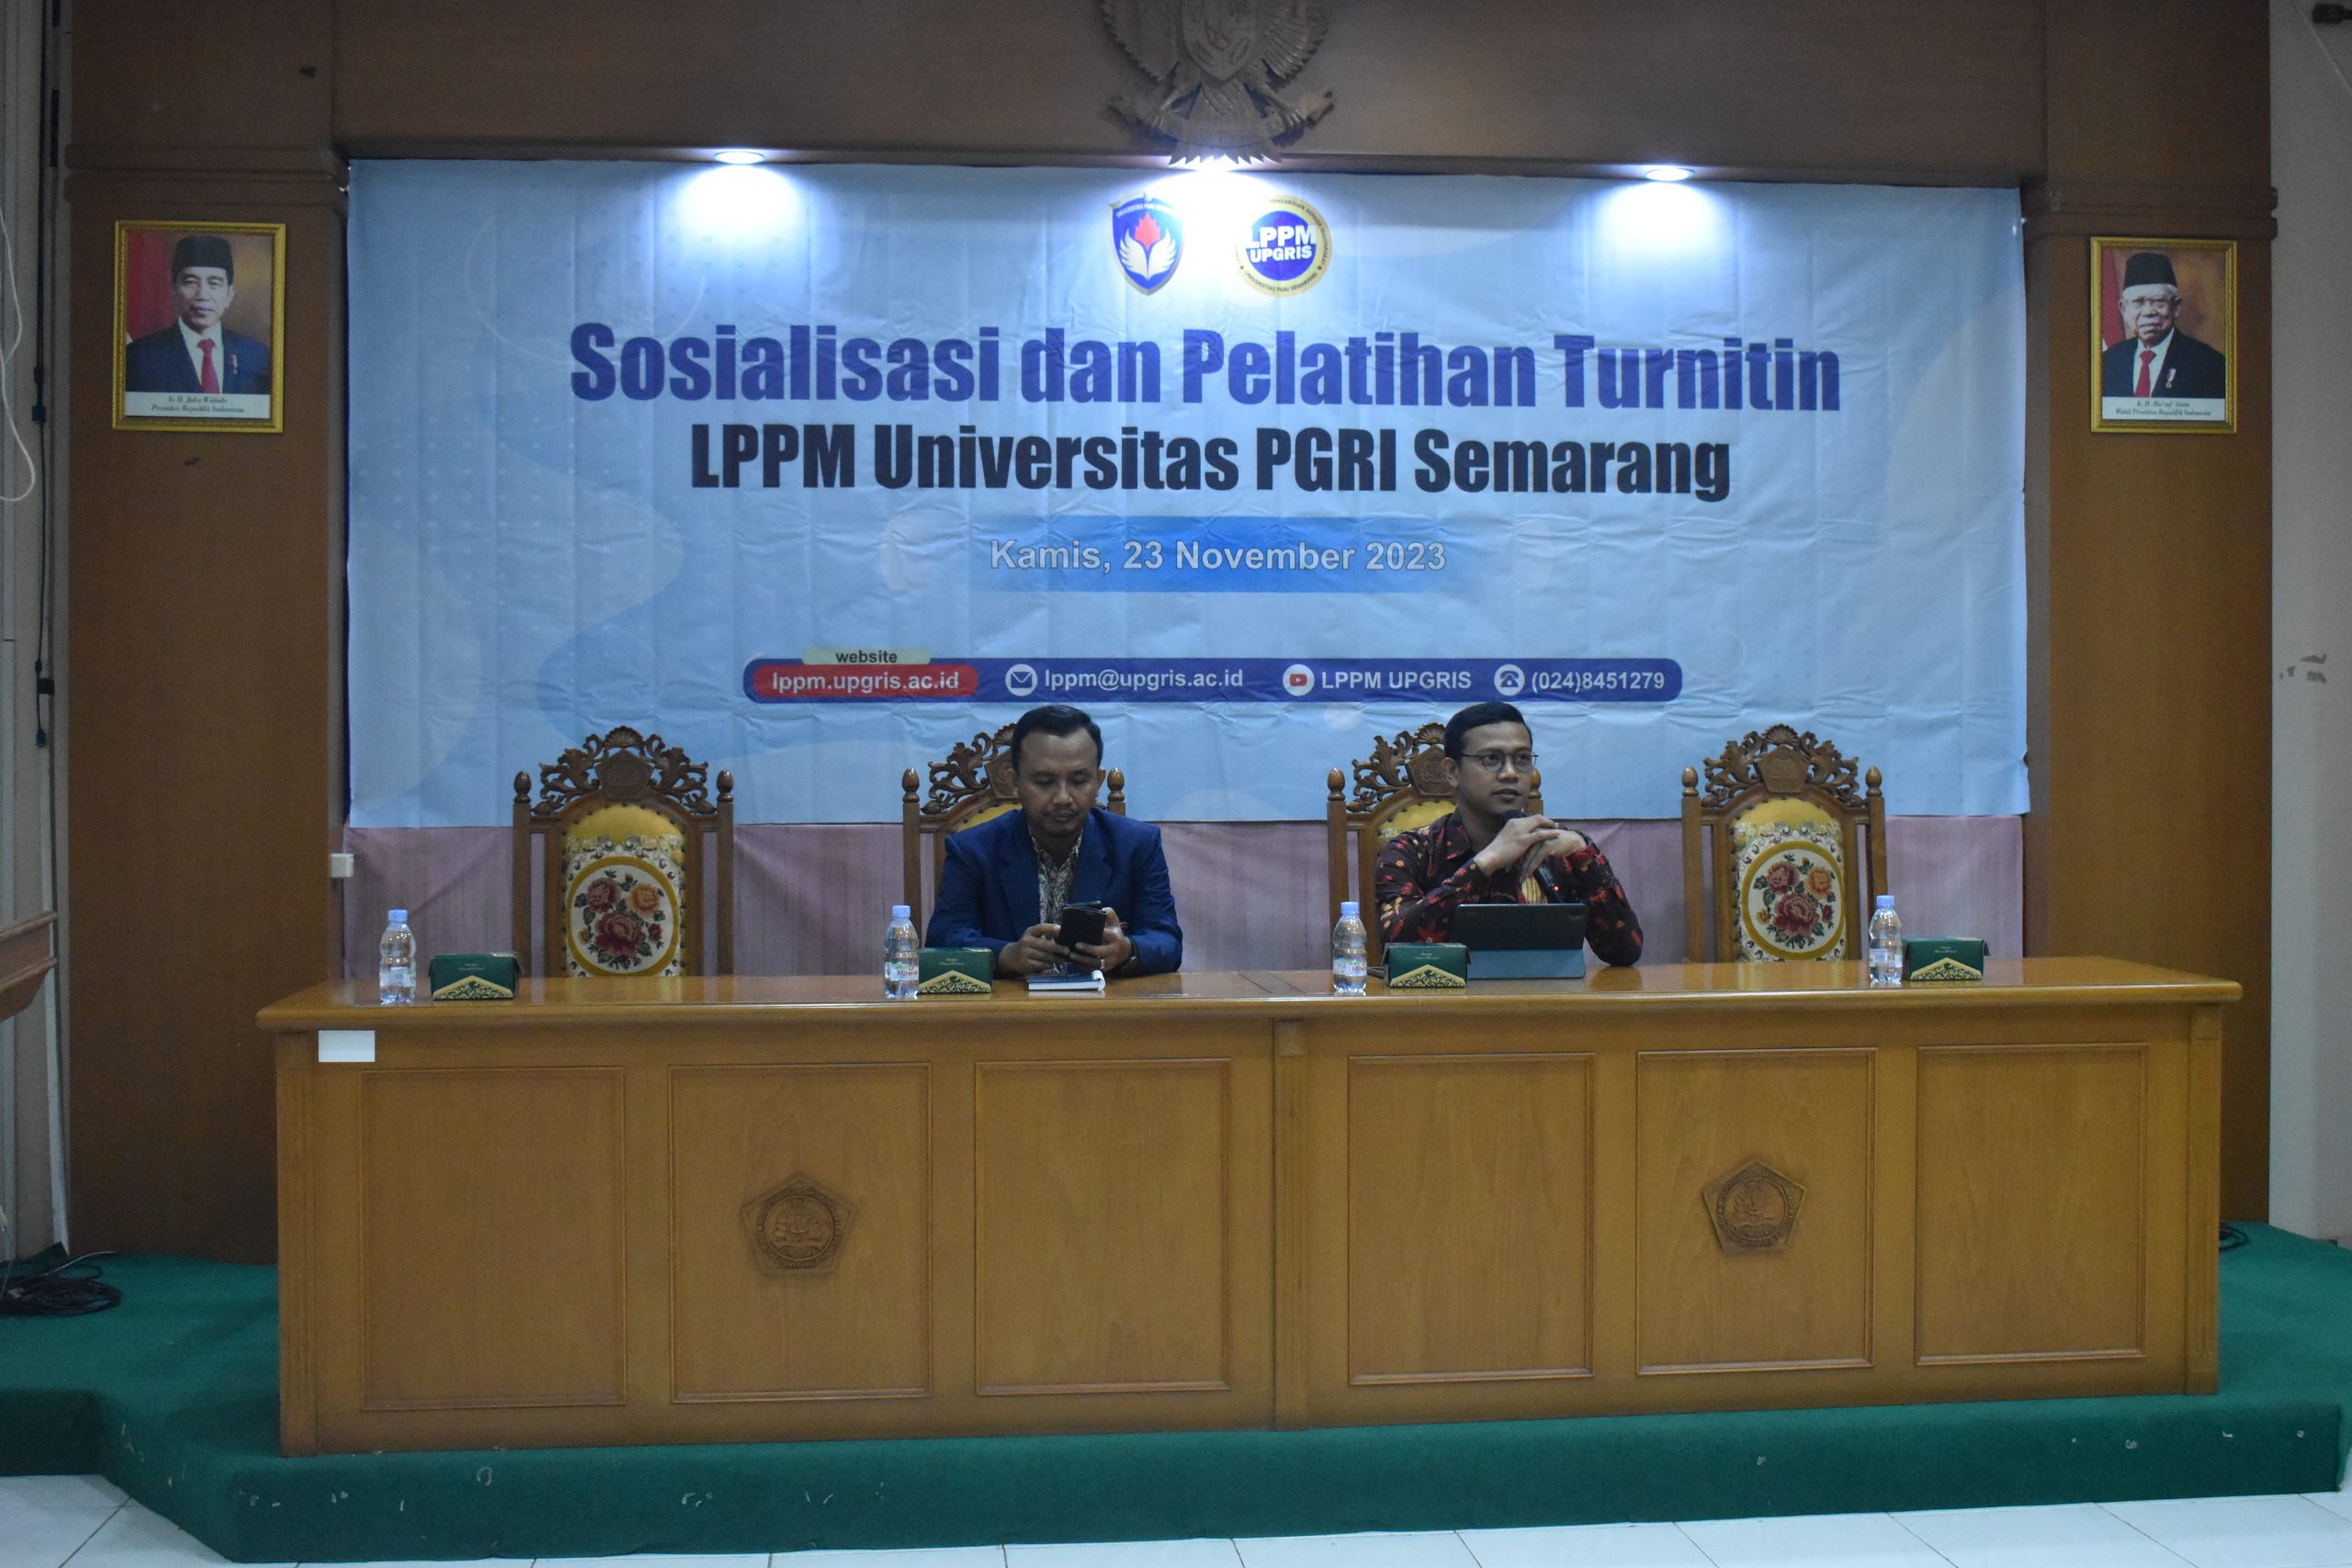 Sosialisasi dan Pelatihan Turnitin LPPM Universitas PGRI Semarang